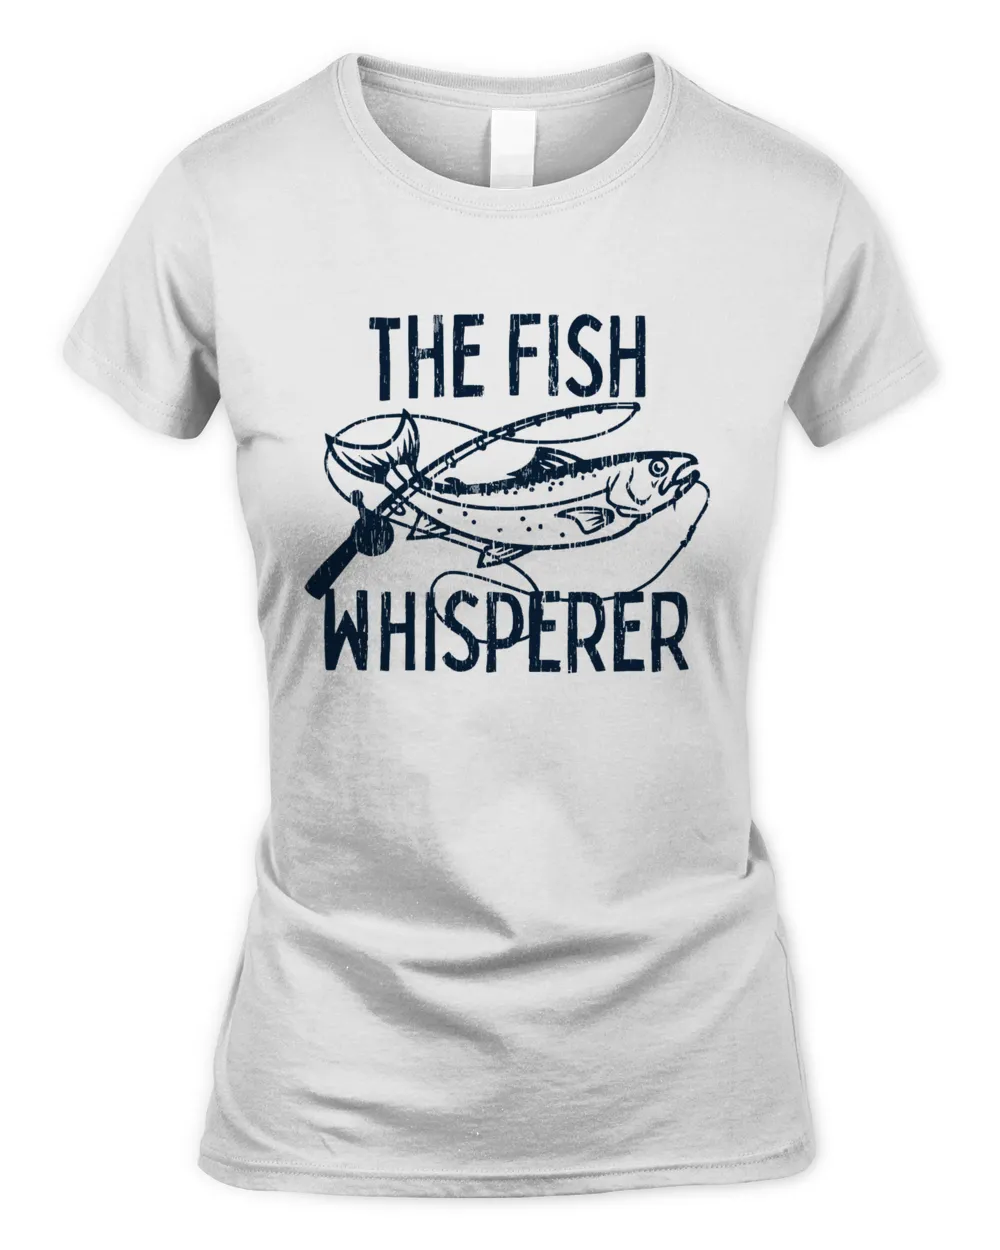 Mens Fishing T shirt, Funny Fishing Shirt, Fishing Graphic Tee, Fisherman Gifts, Present For fisherman, The Fish Whisperer